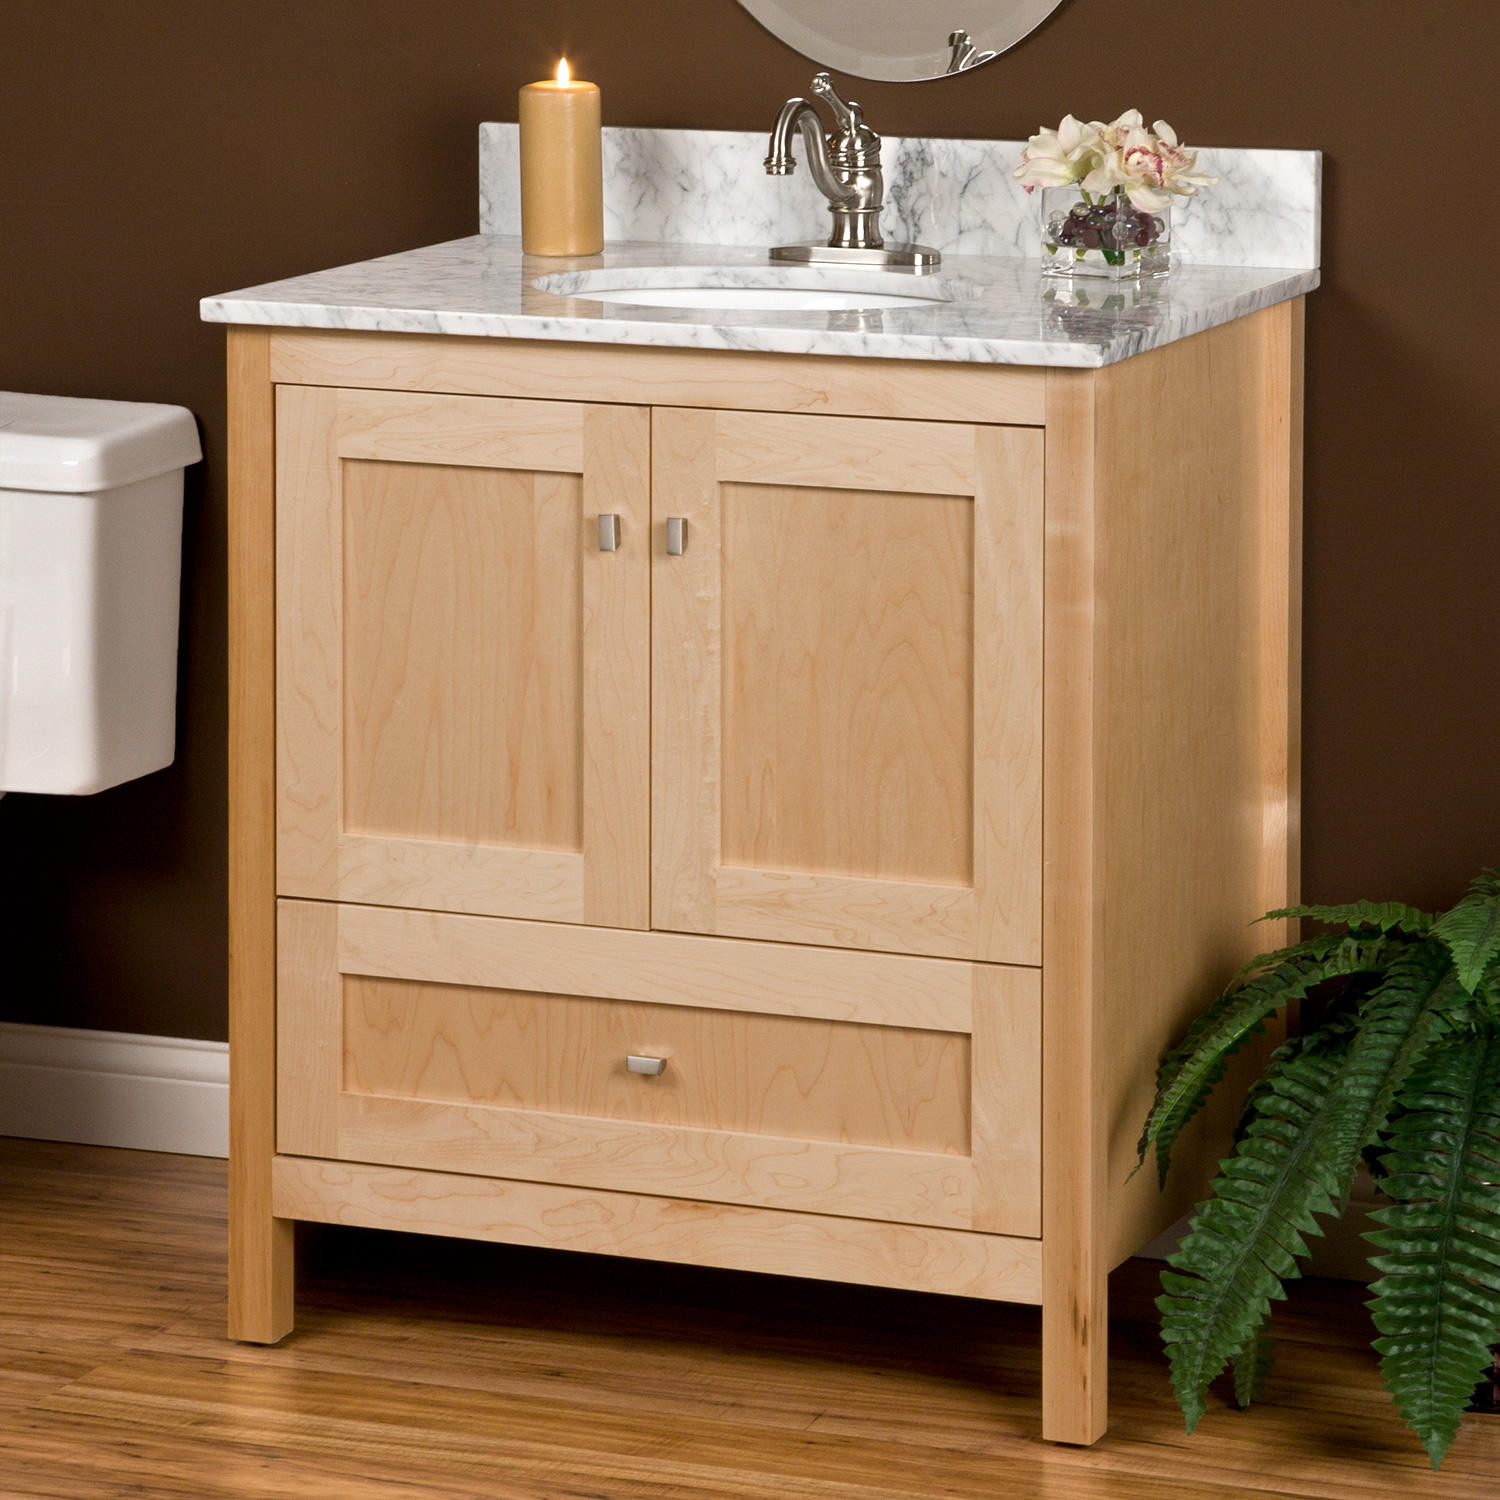 Maple Bathroom Vanity
 Undermount Wood Vanity